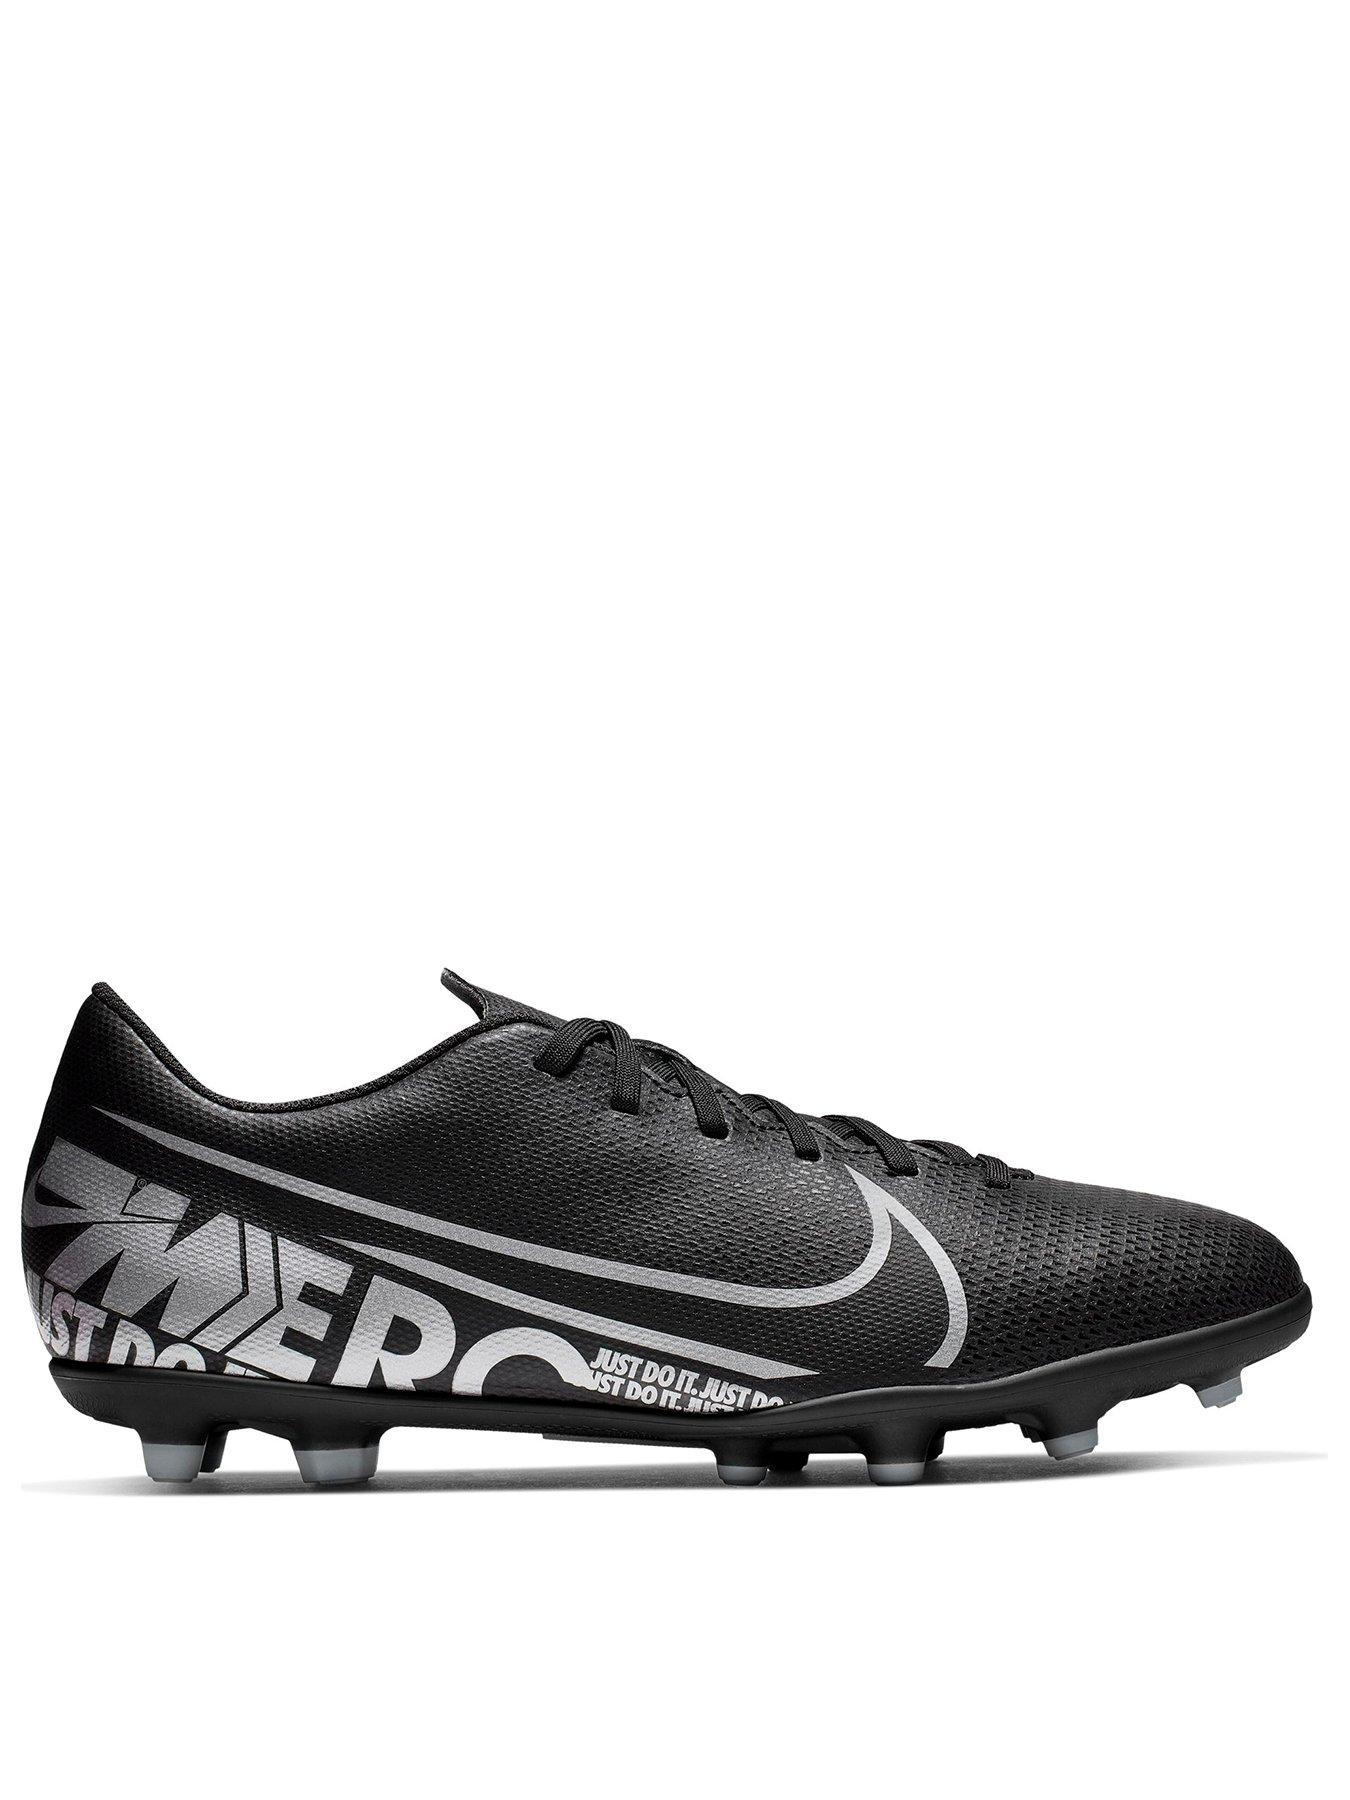 Football shoes Nike Mercurial Vapor 13 Academy Tf Jr.